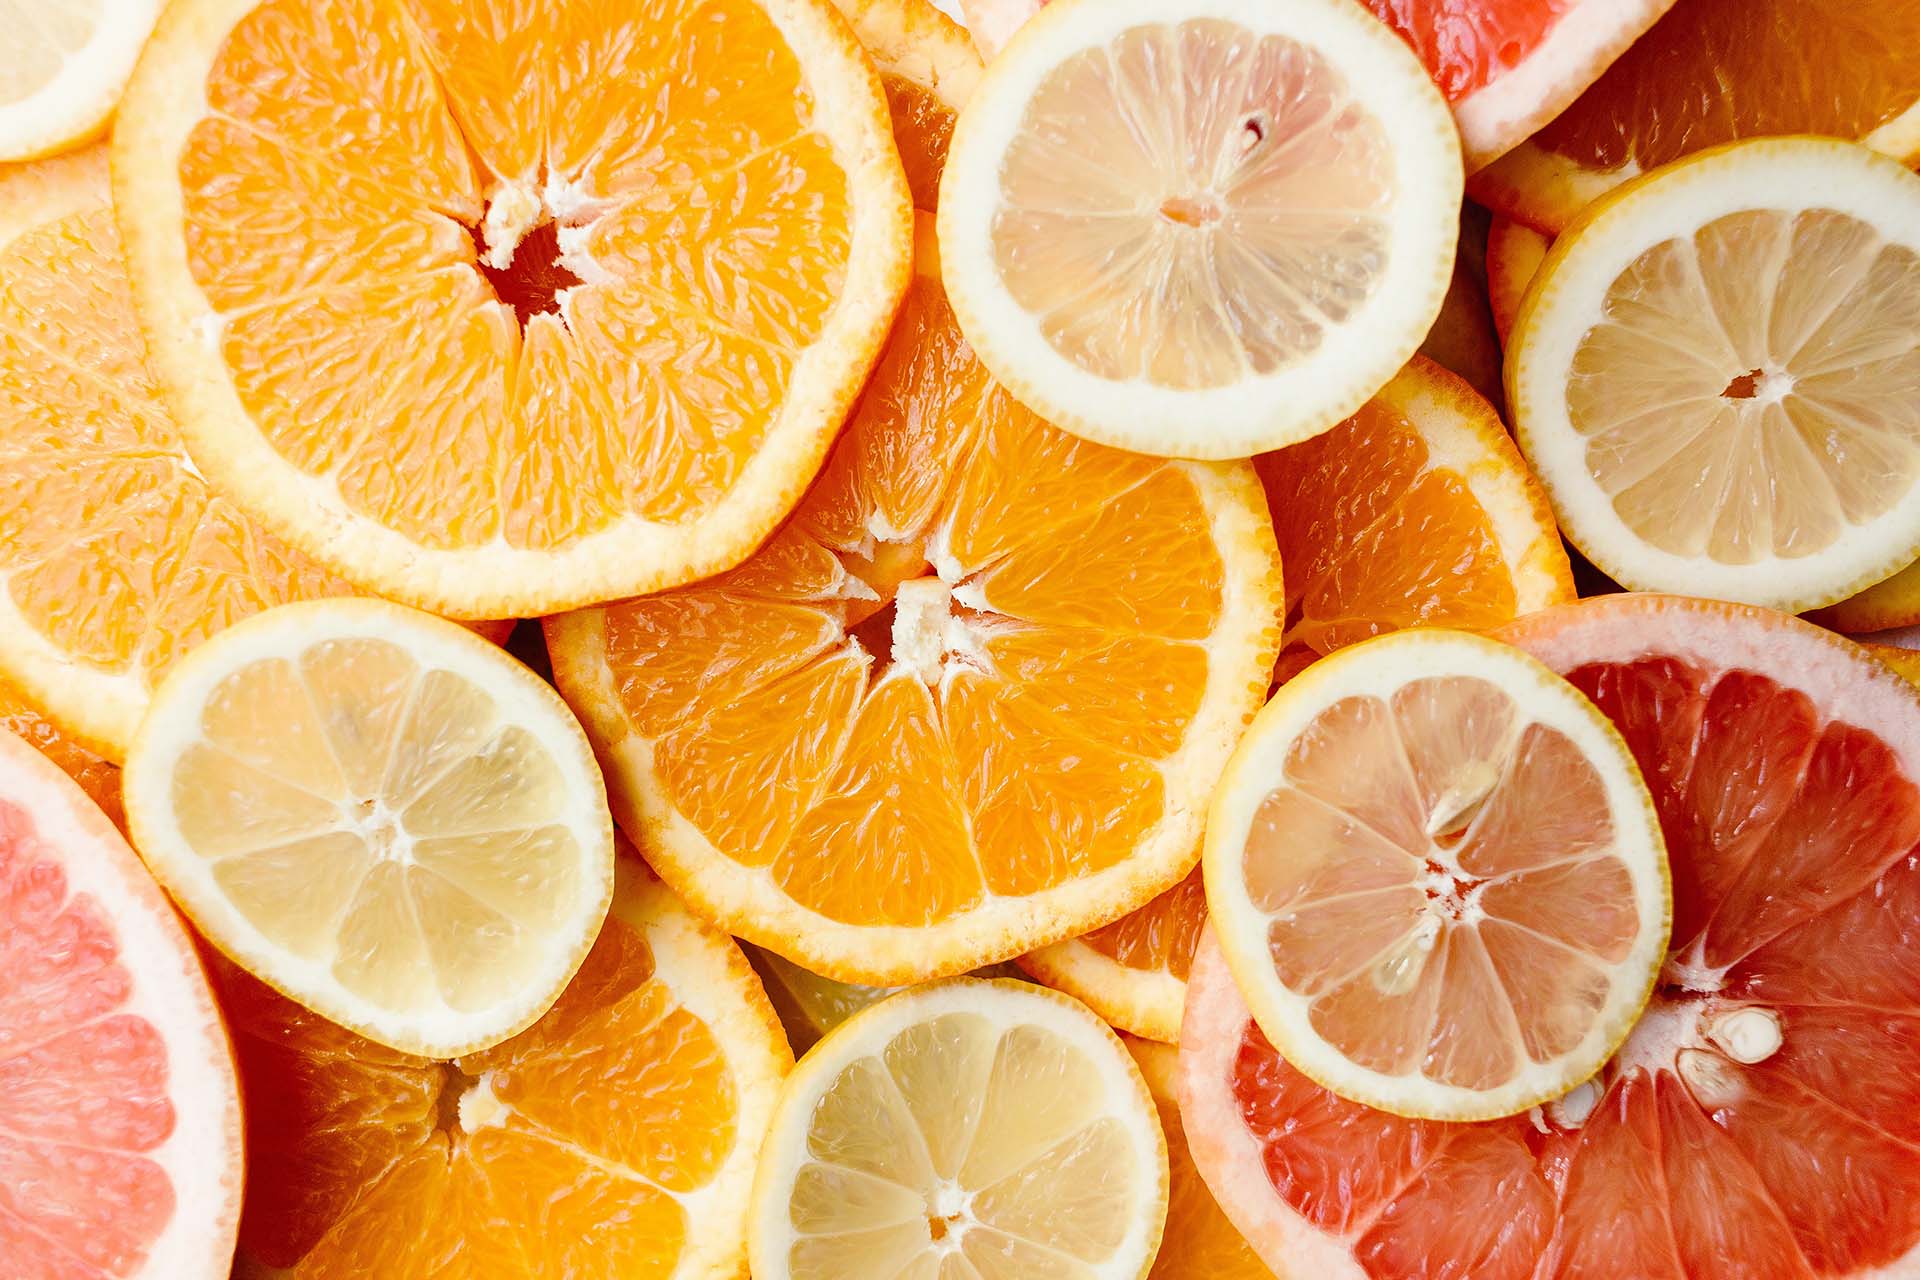 orange and lemon slices